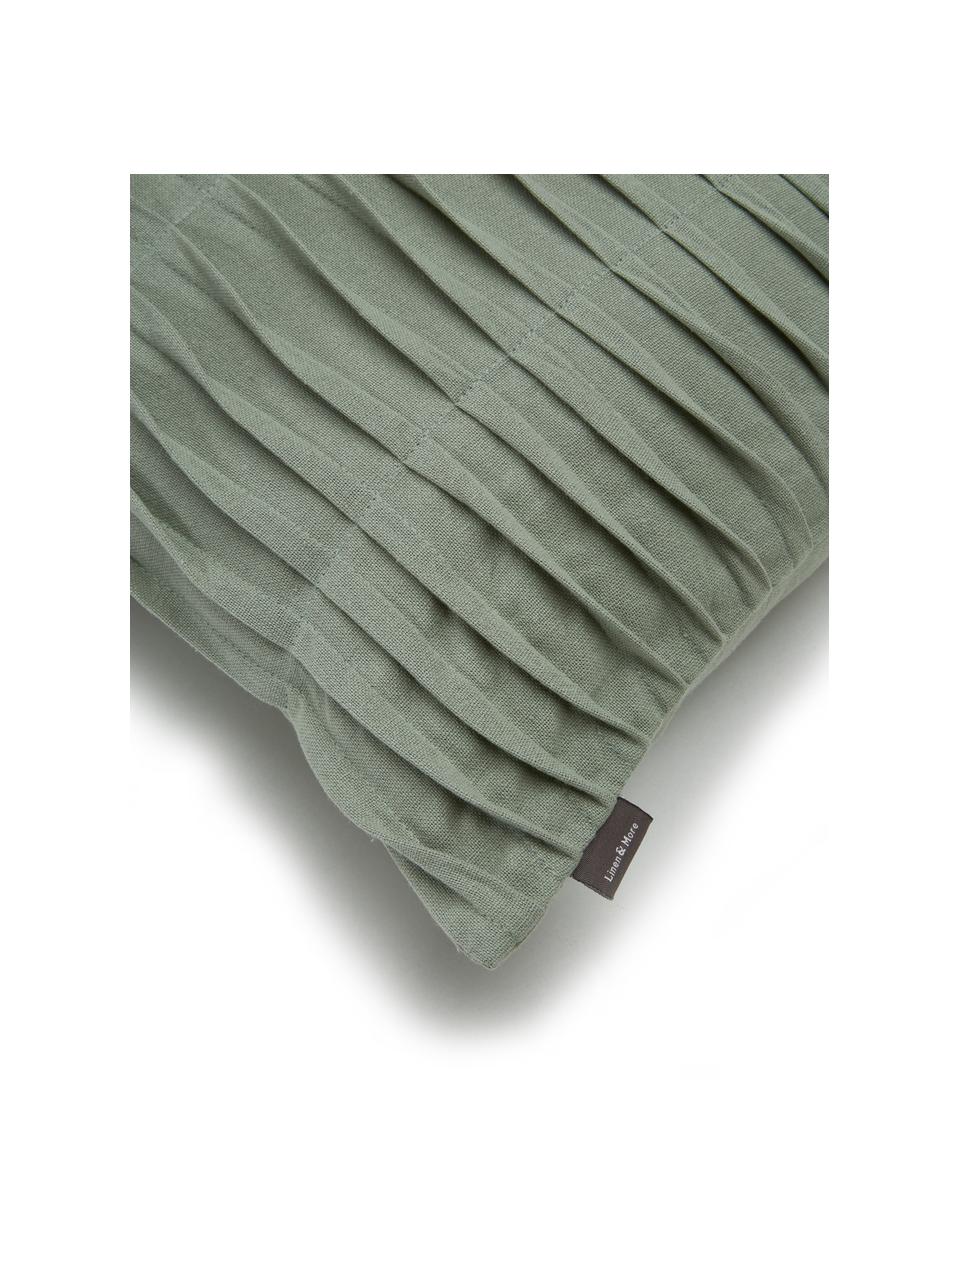 Cuscino in cotone verde menta con superficie arricciata Pleated, Cotone, Verde menta, Larg. 45 x Lung. 45 cm